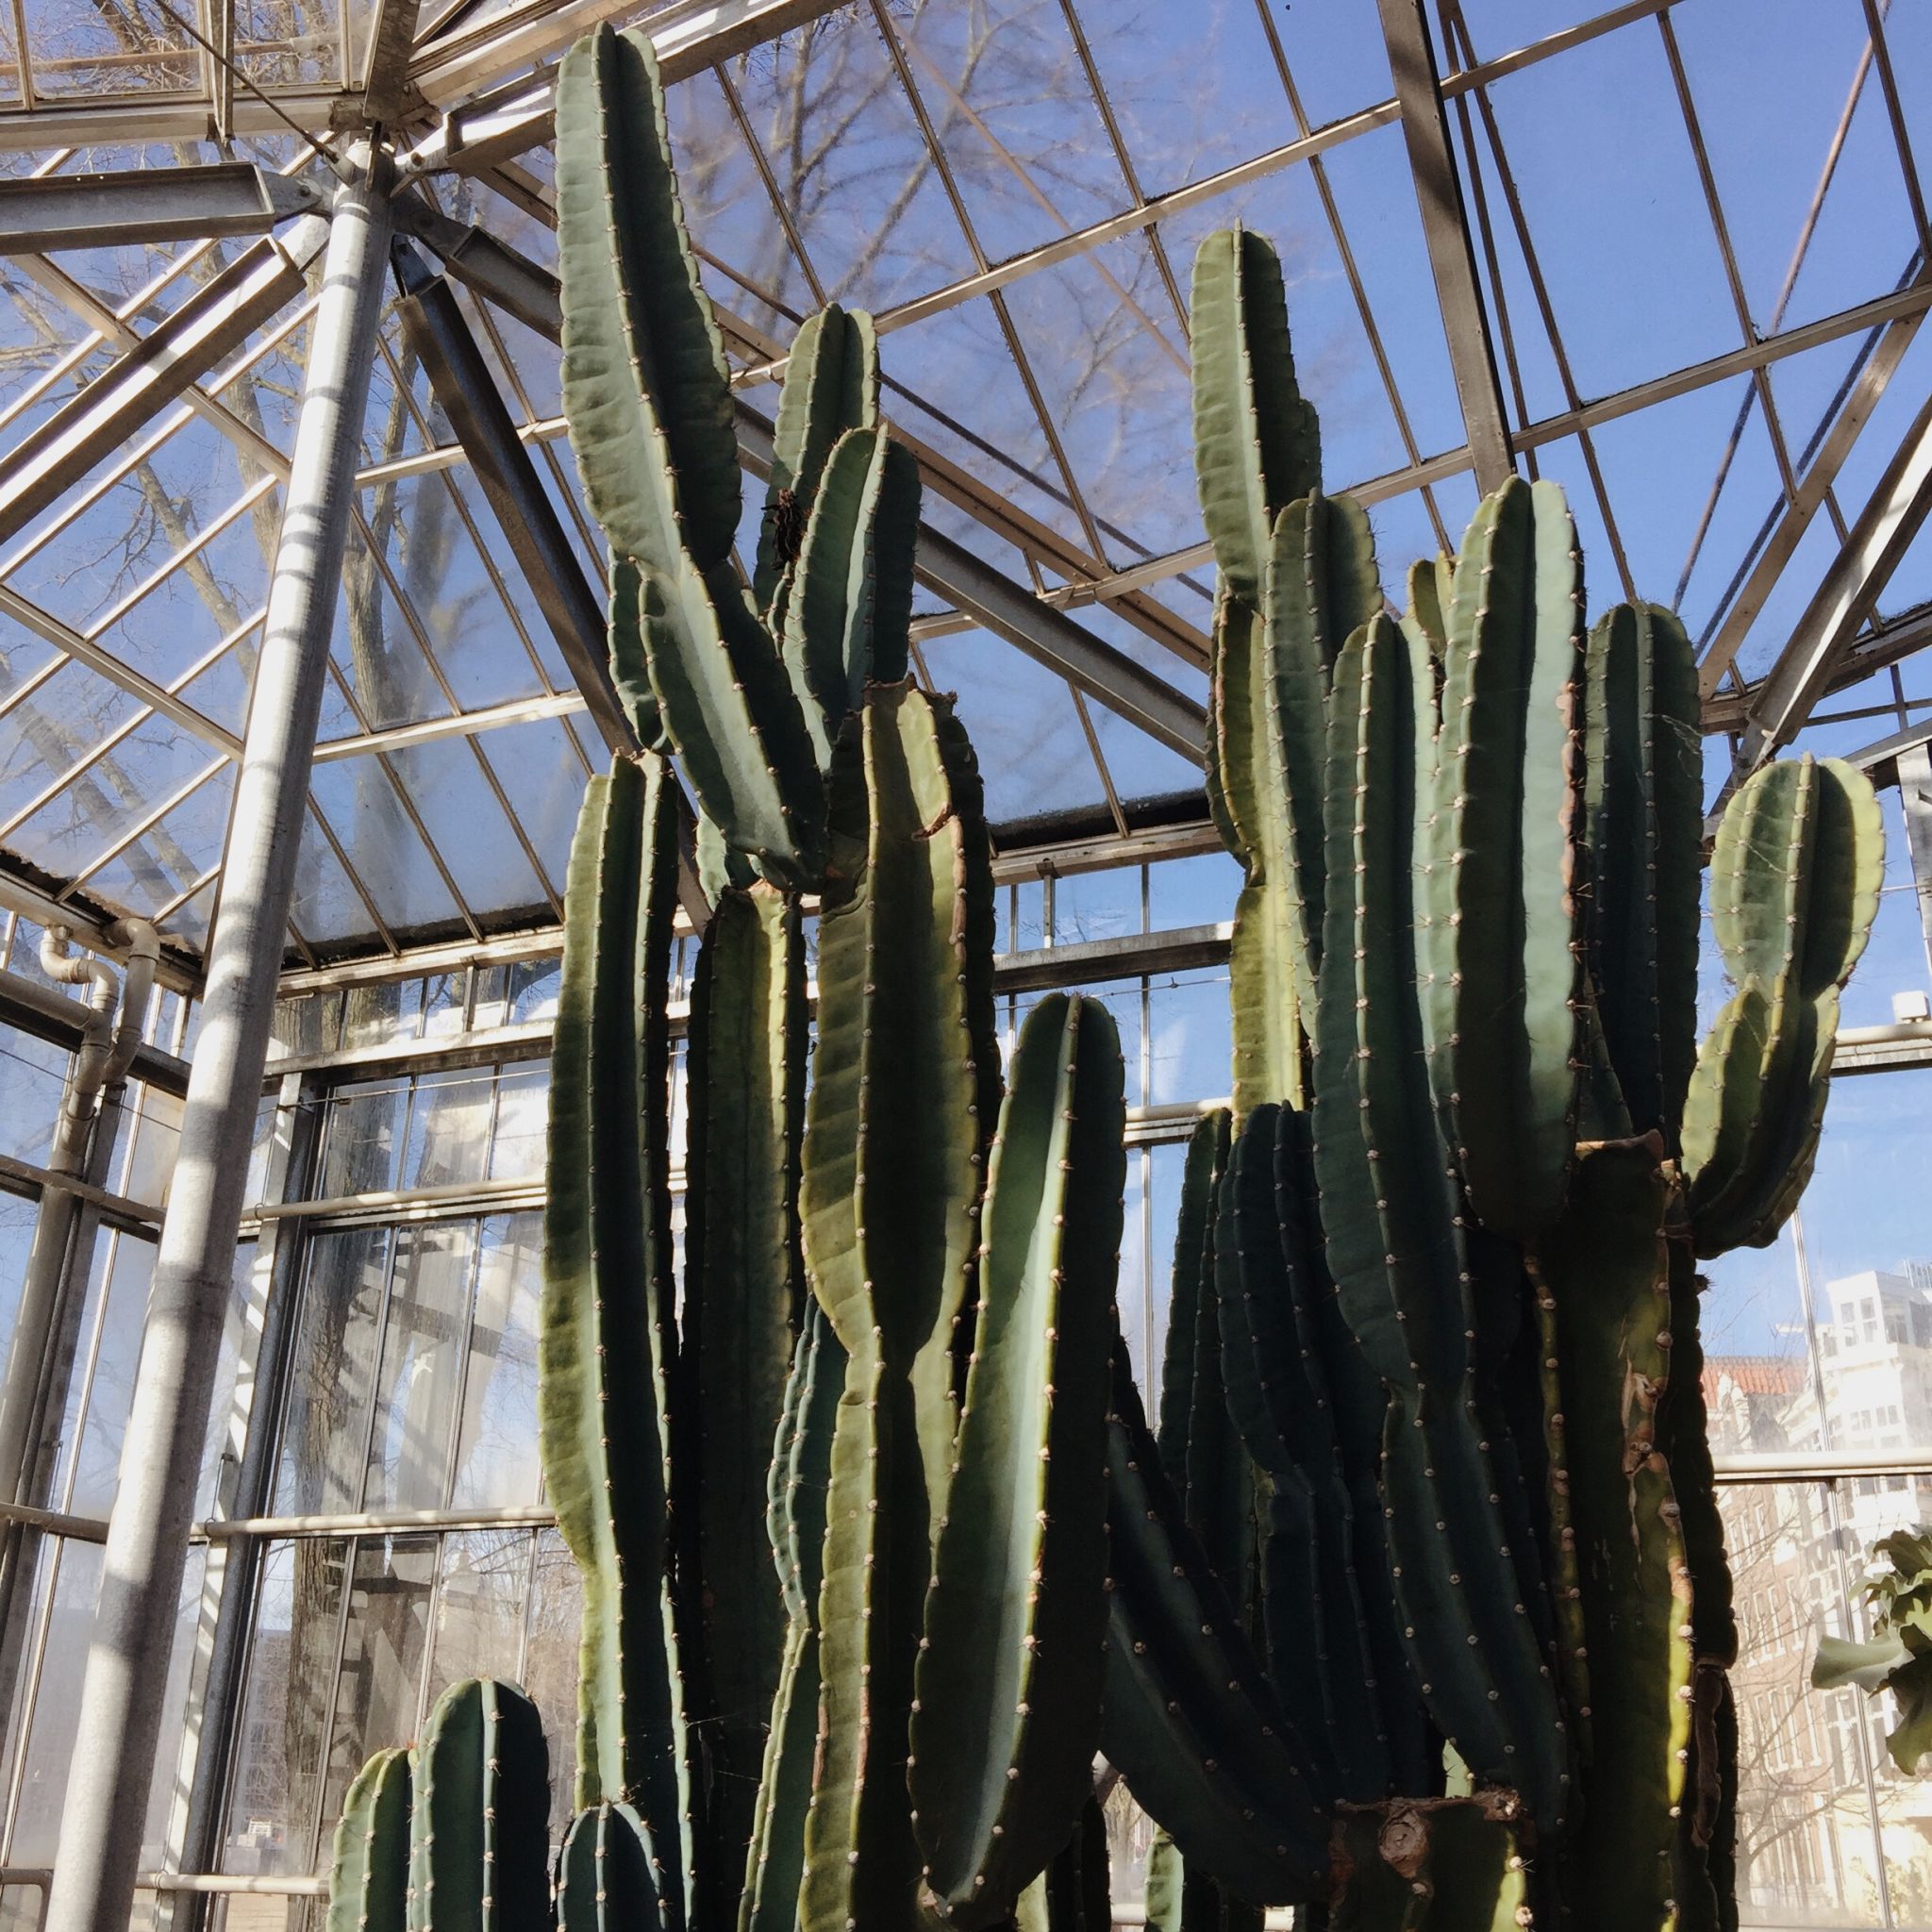 hortus-botanicus-amsterdam-botanic-garden-cactus